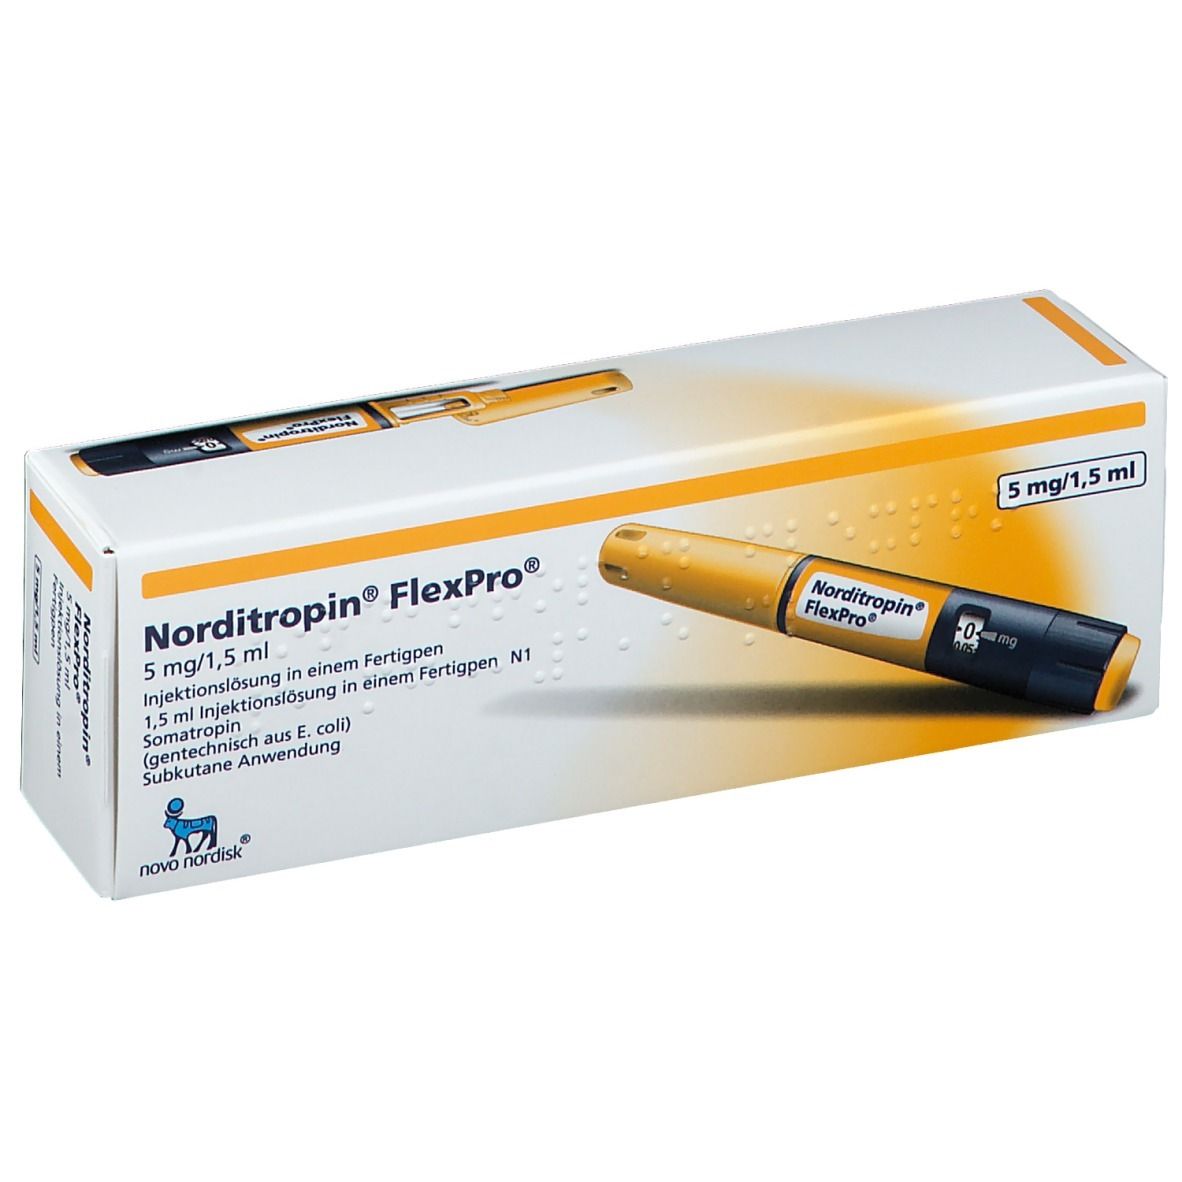 norditropin-flexpro-5-mg-1-5-ml-injektionsloesung-in-einem-fertigpen-D05459387-p10